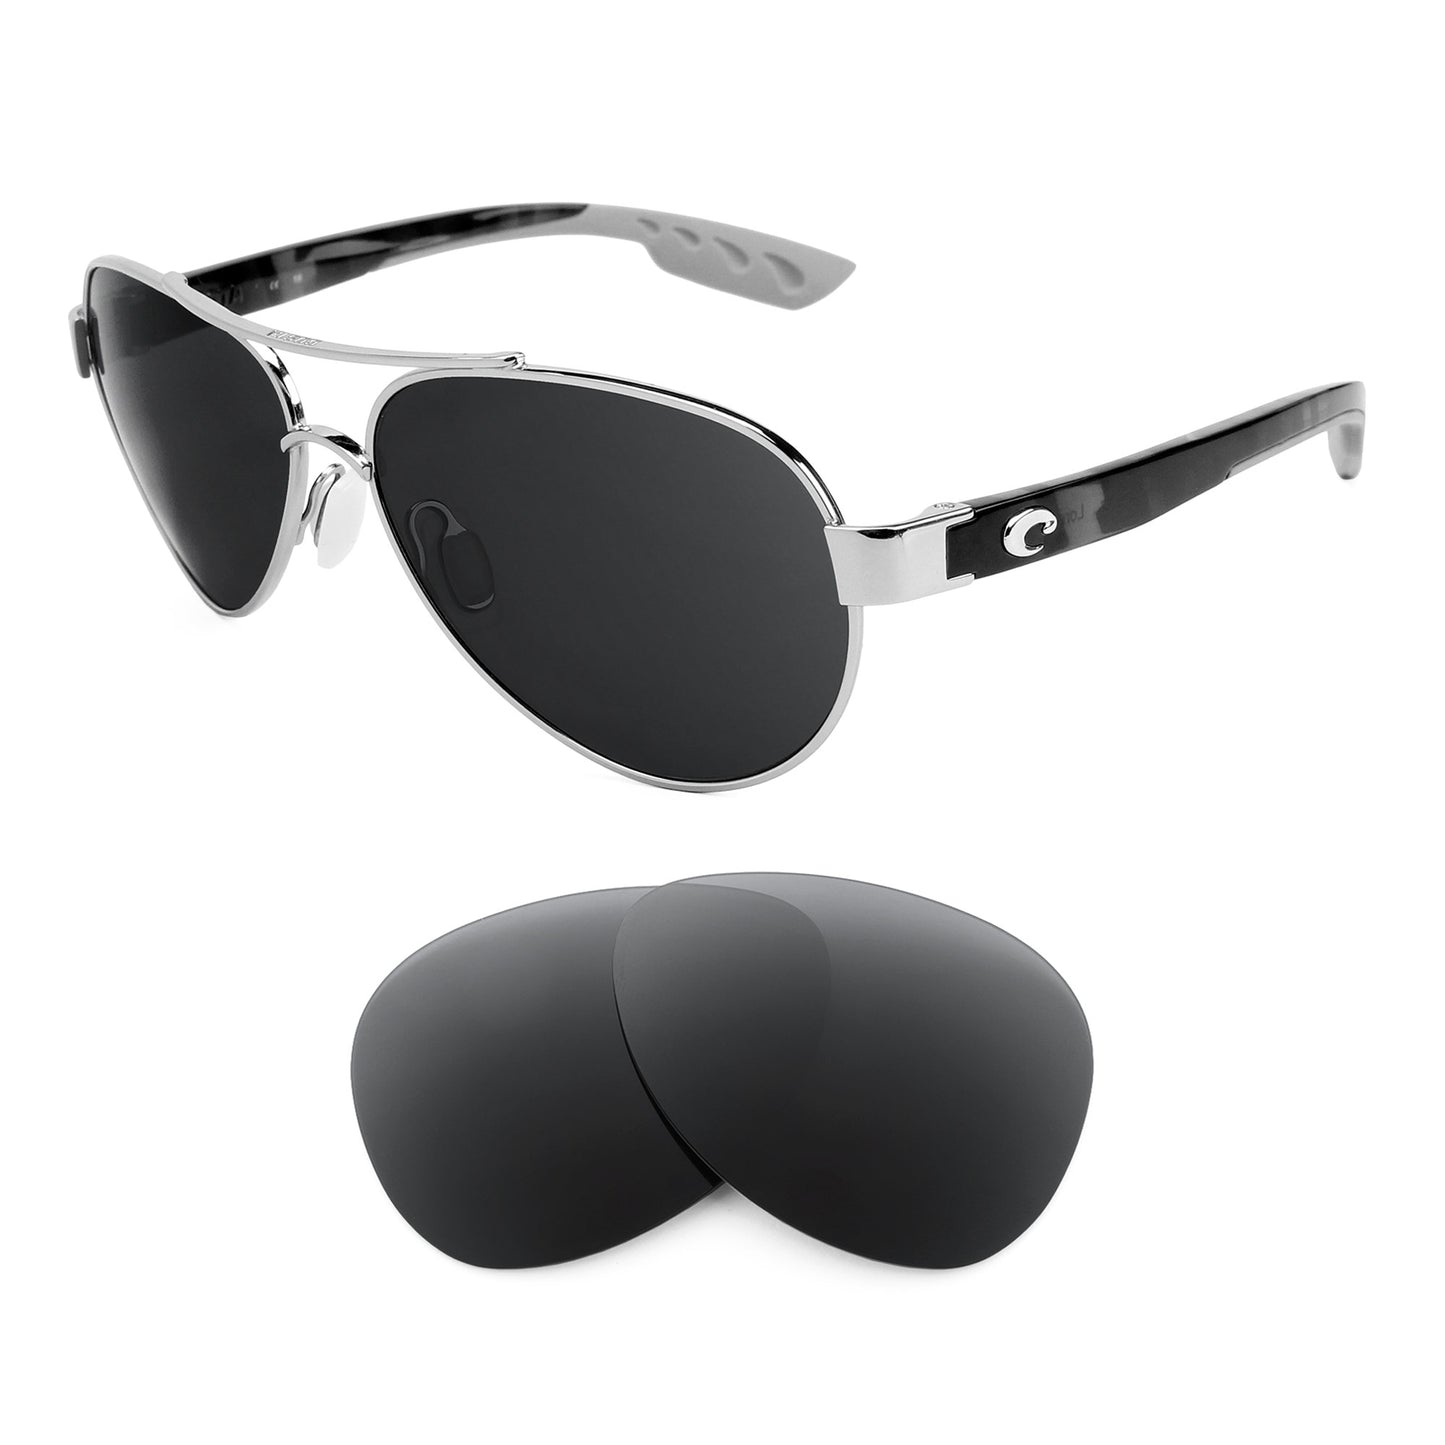 Costa Loreto sunglasses with replacement lenses